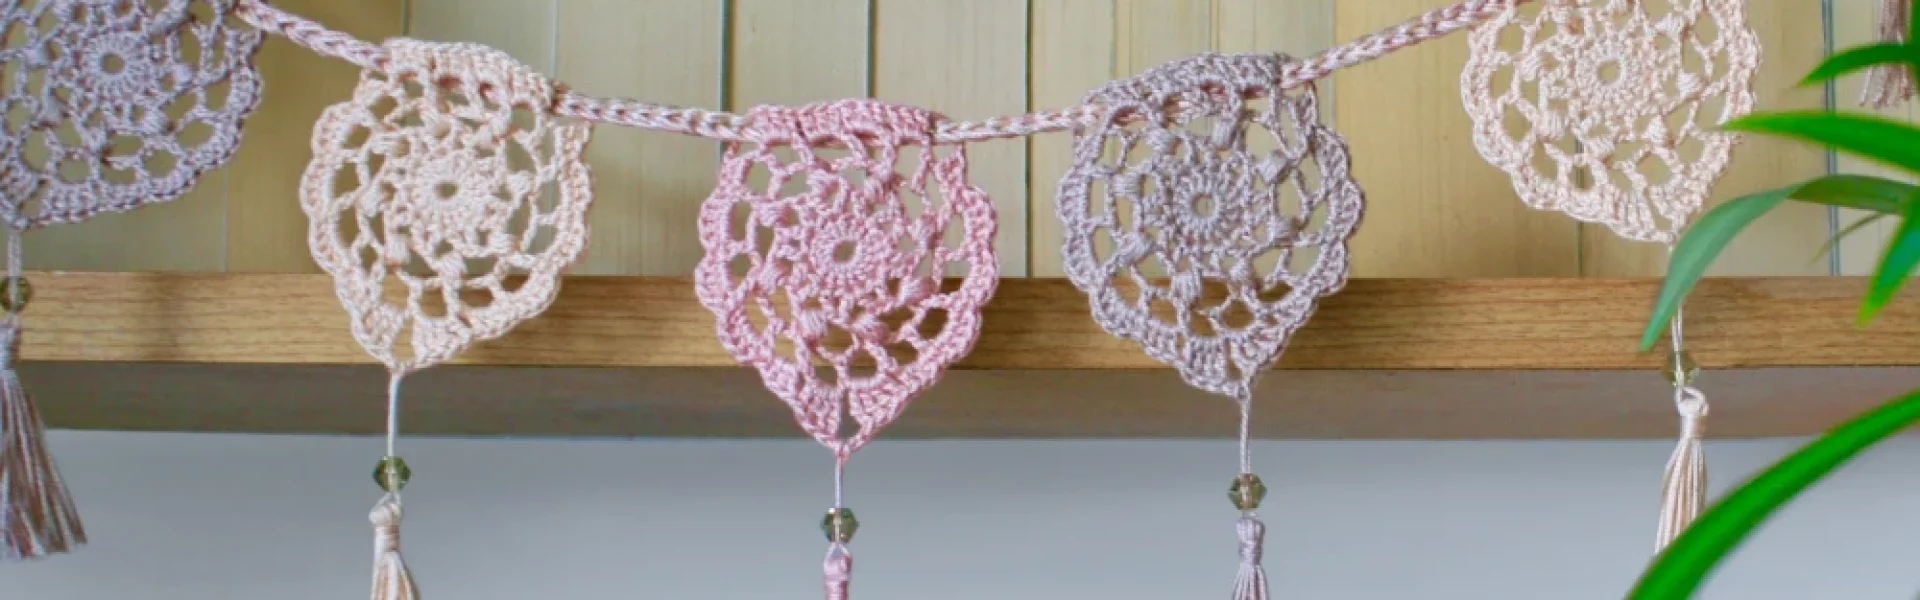 Crocheted bunting by crochet graduate Eve Llewellyn.